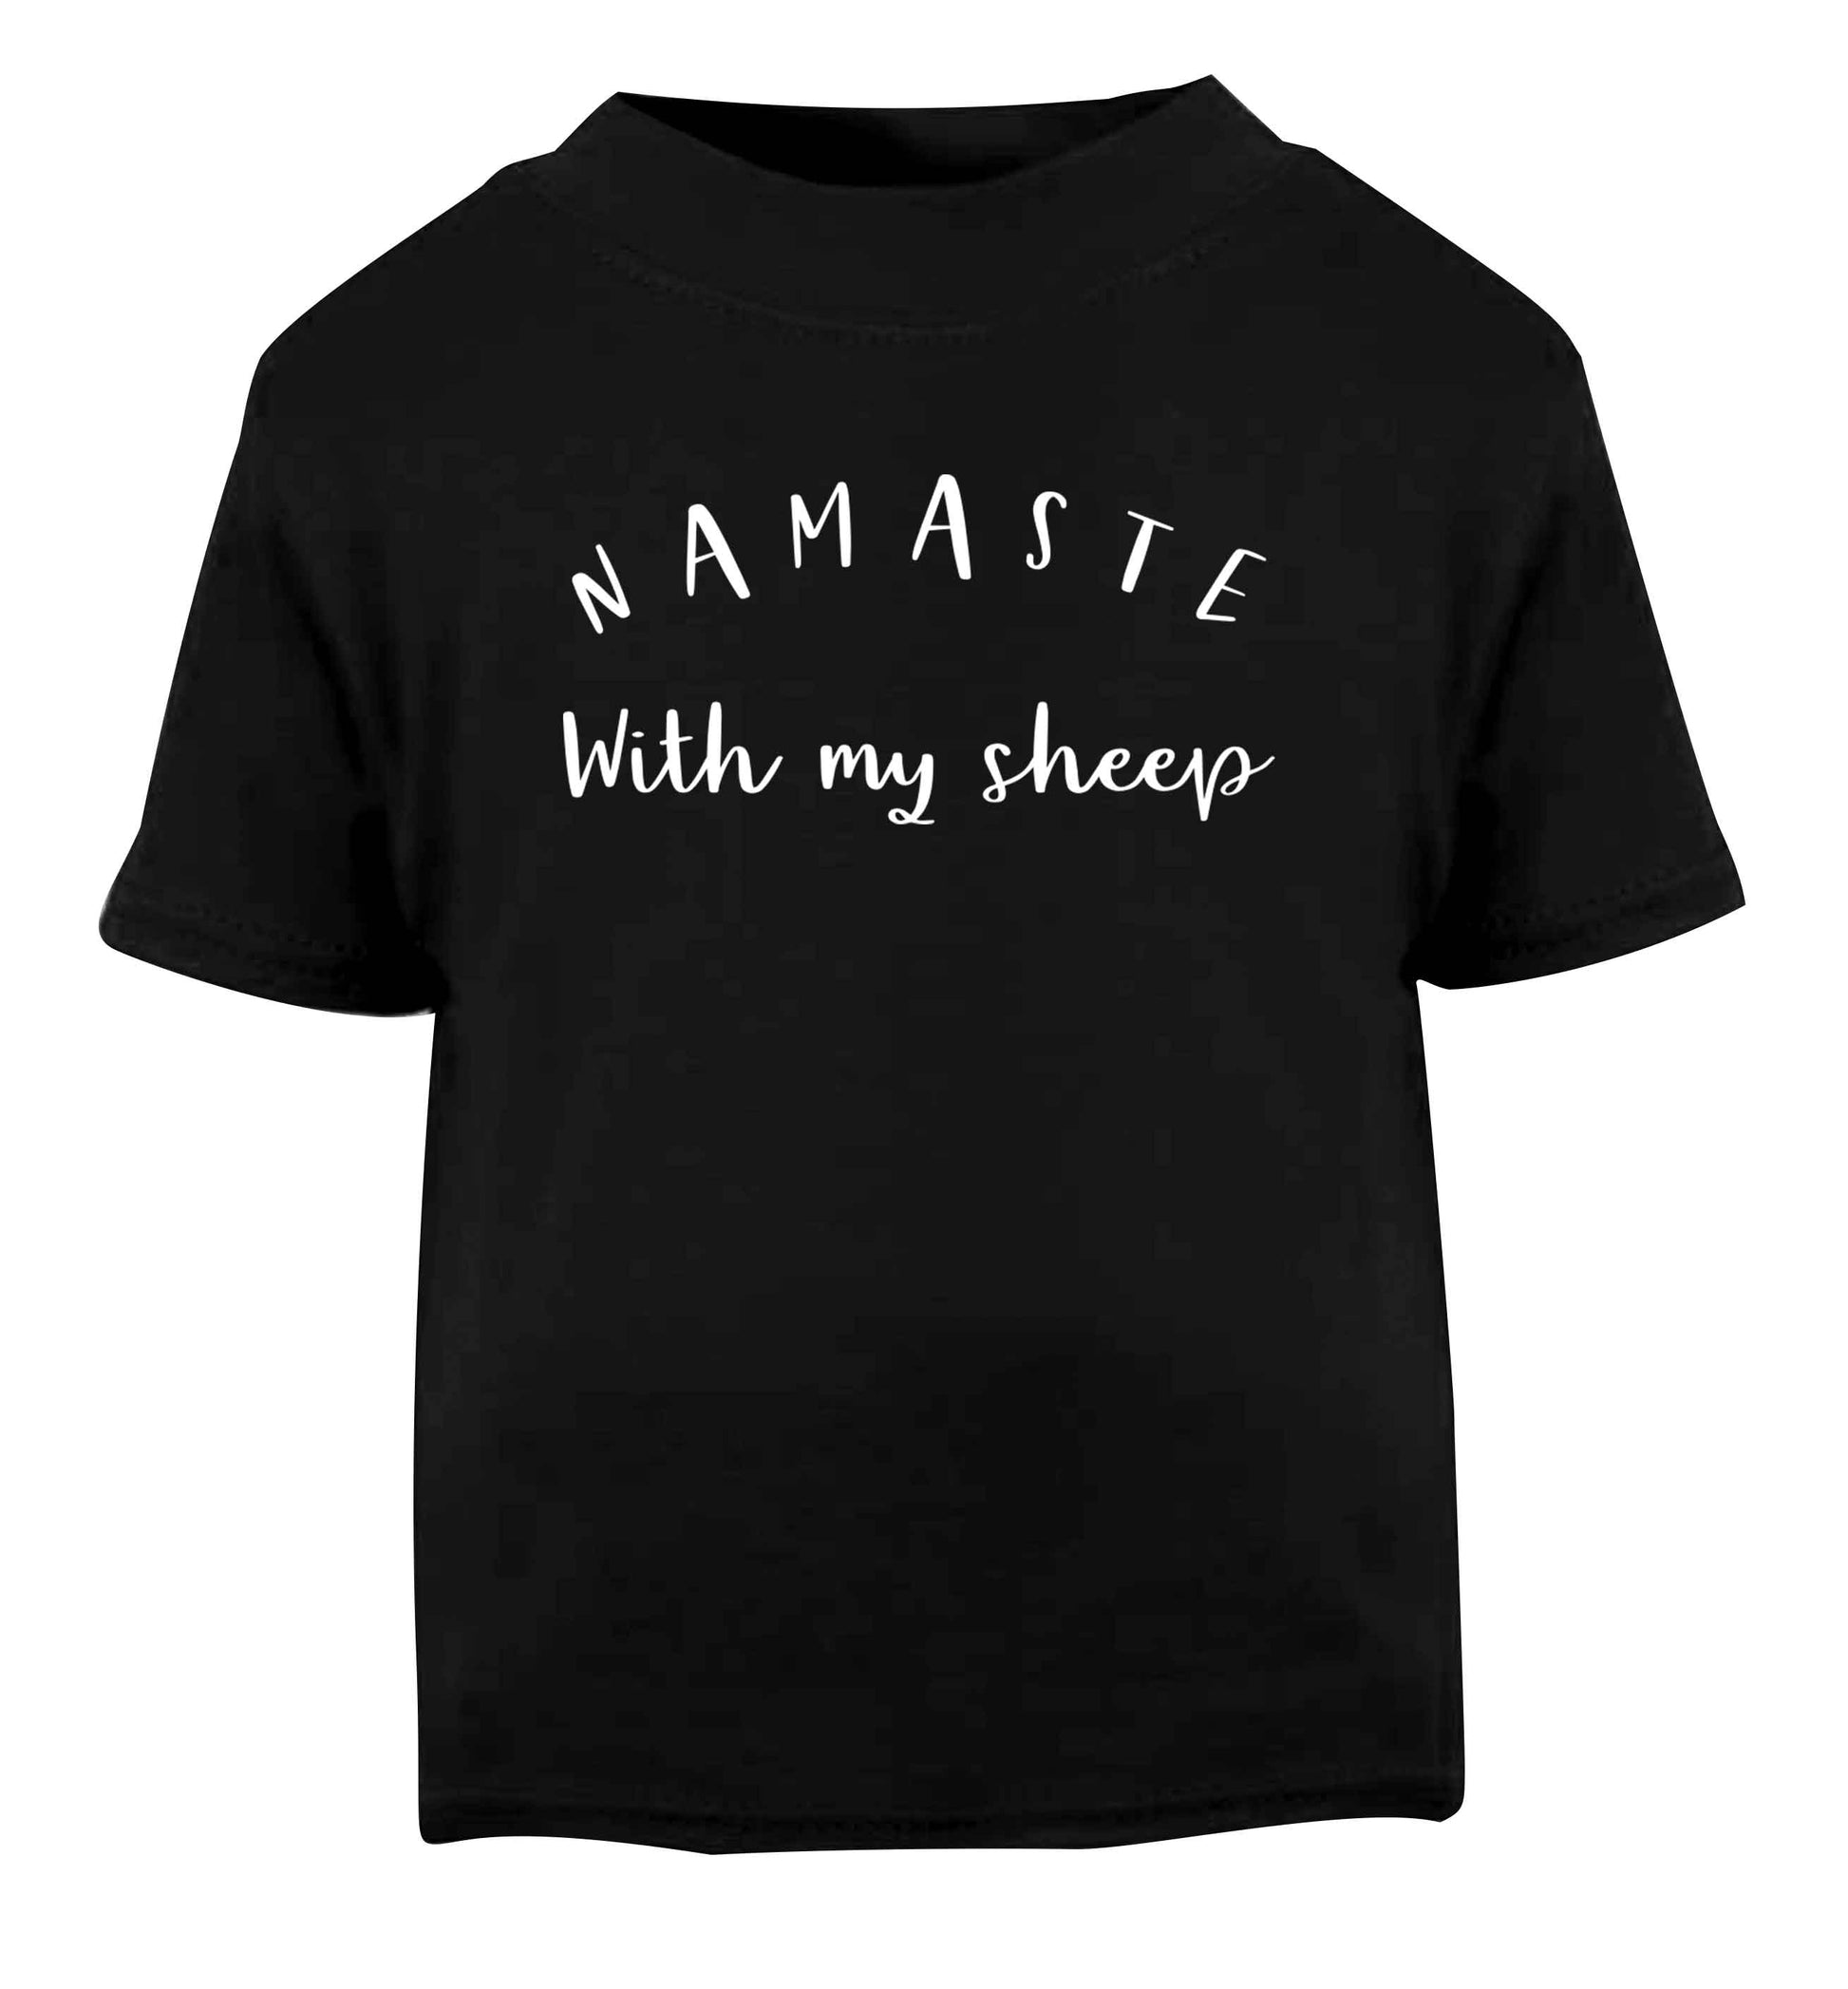 Namaste with my sheep Black Baby Toddler Tshirt 2 years